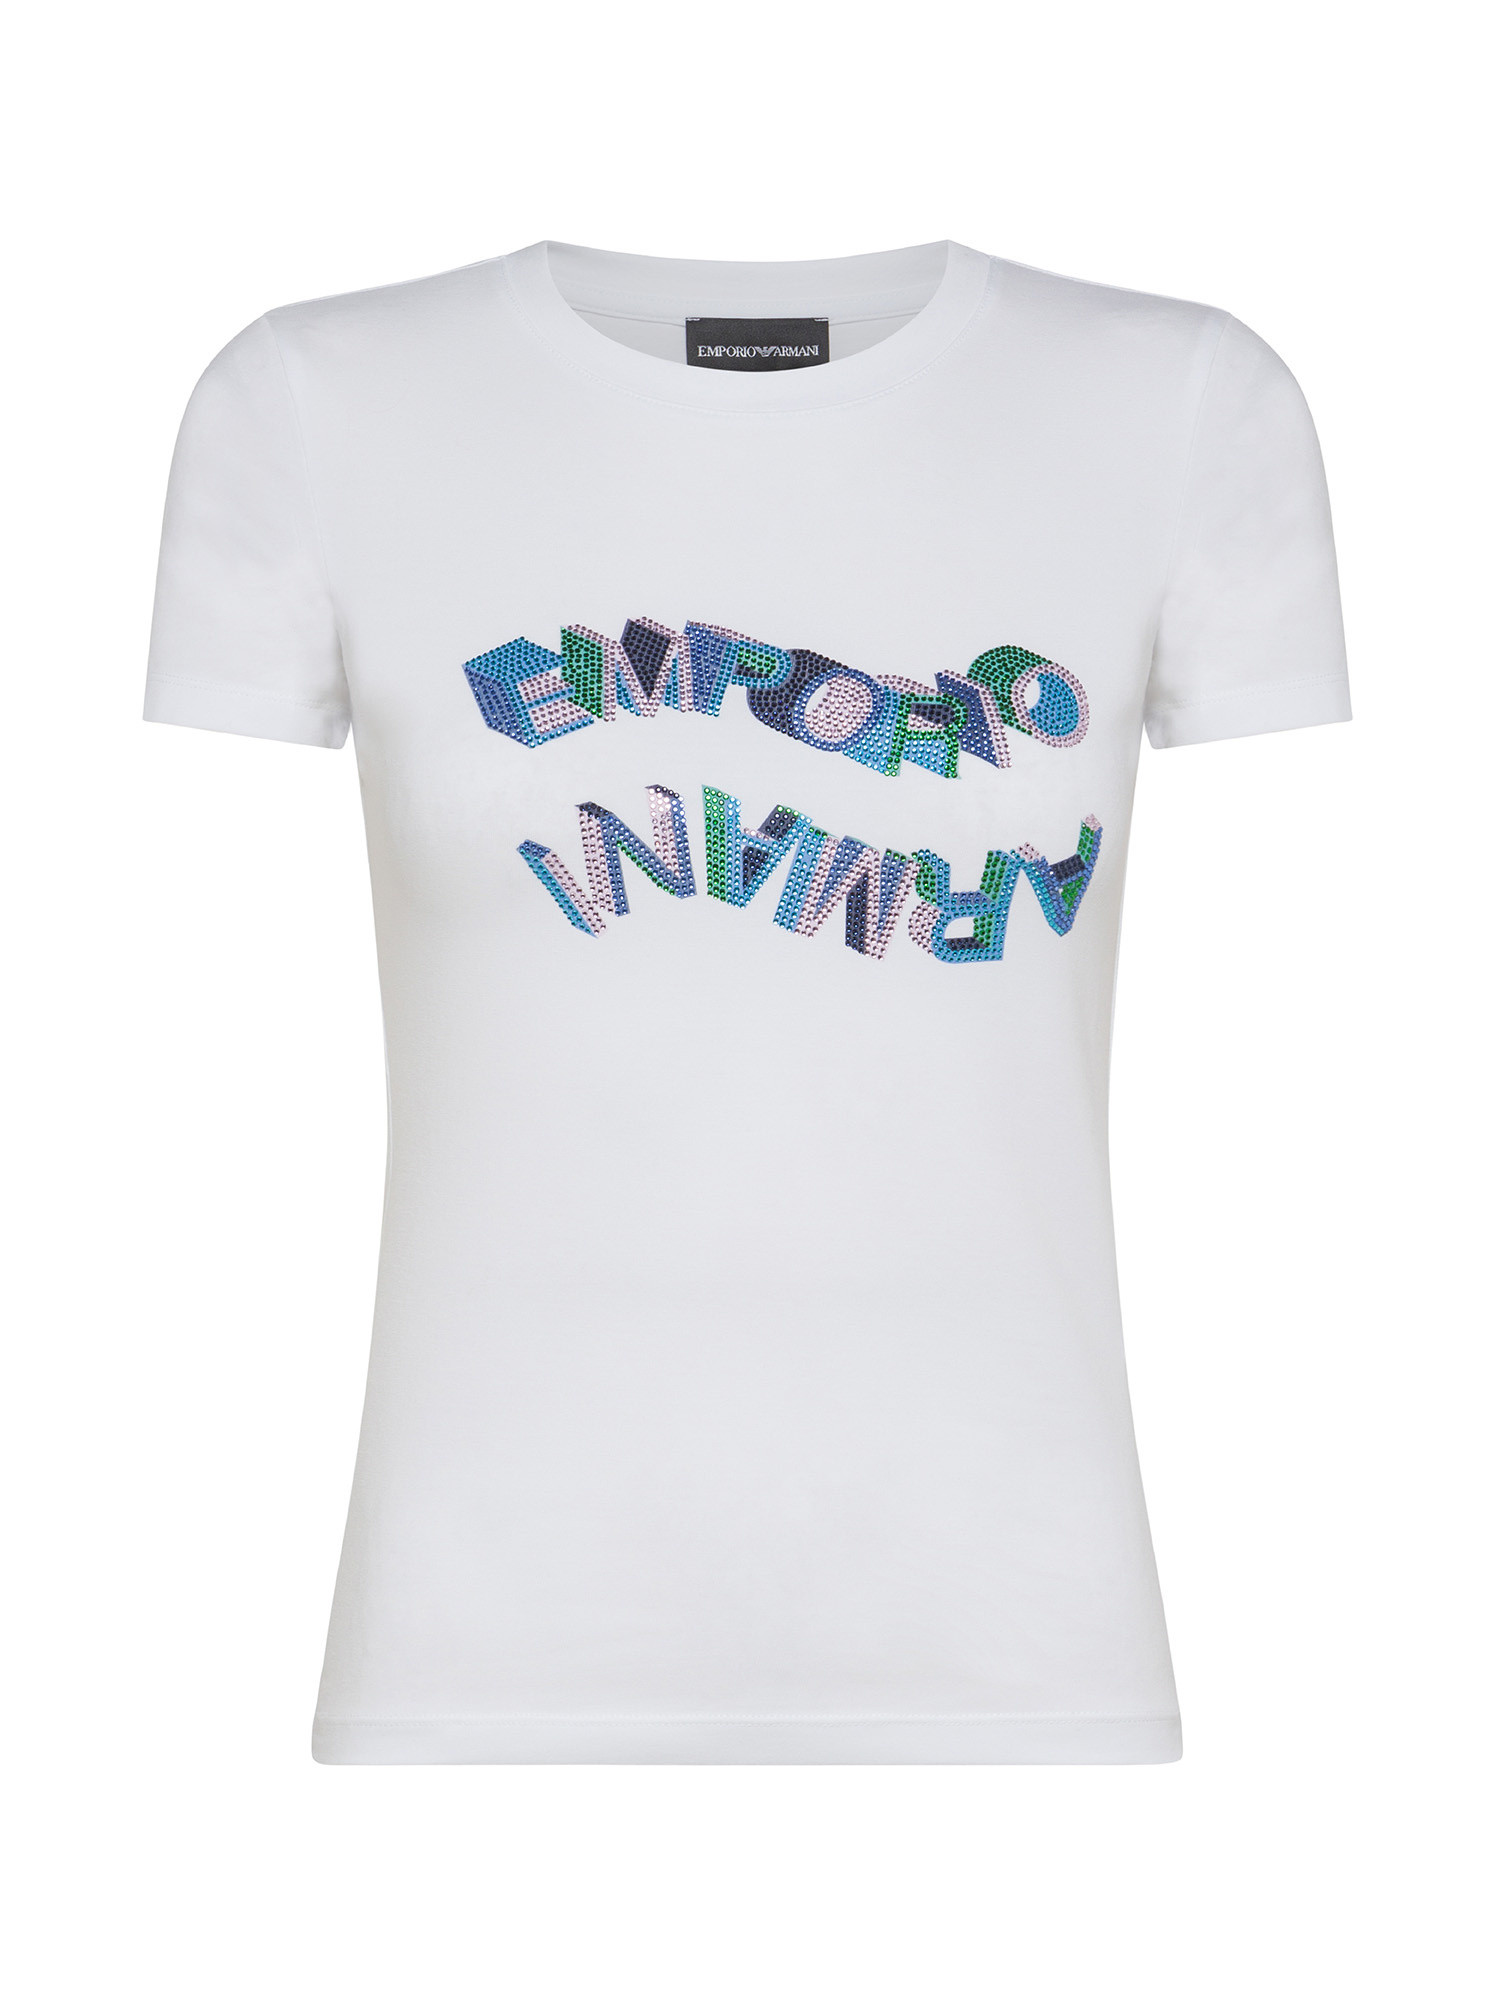 Emporio Armani - T-shirt con logo strass, Bianco, large image number 0